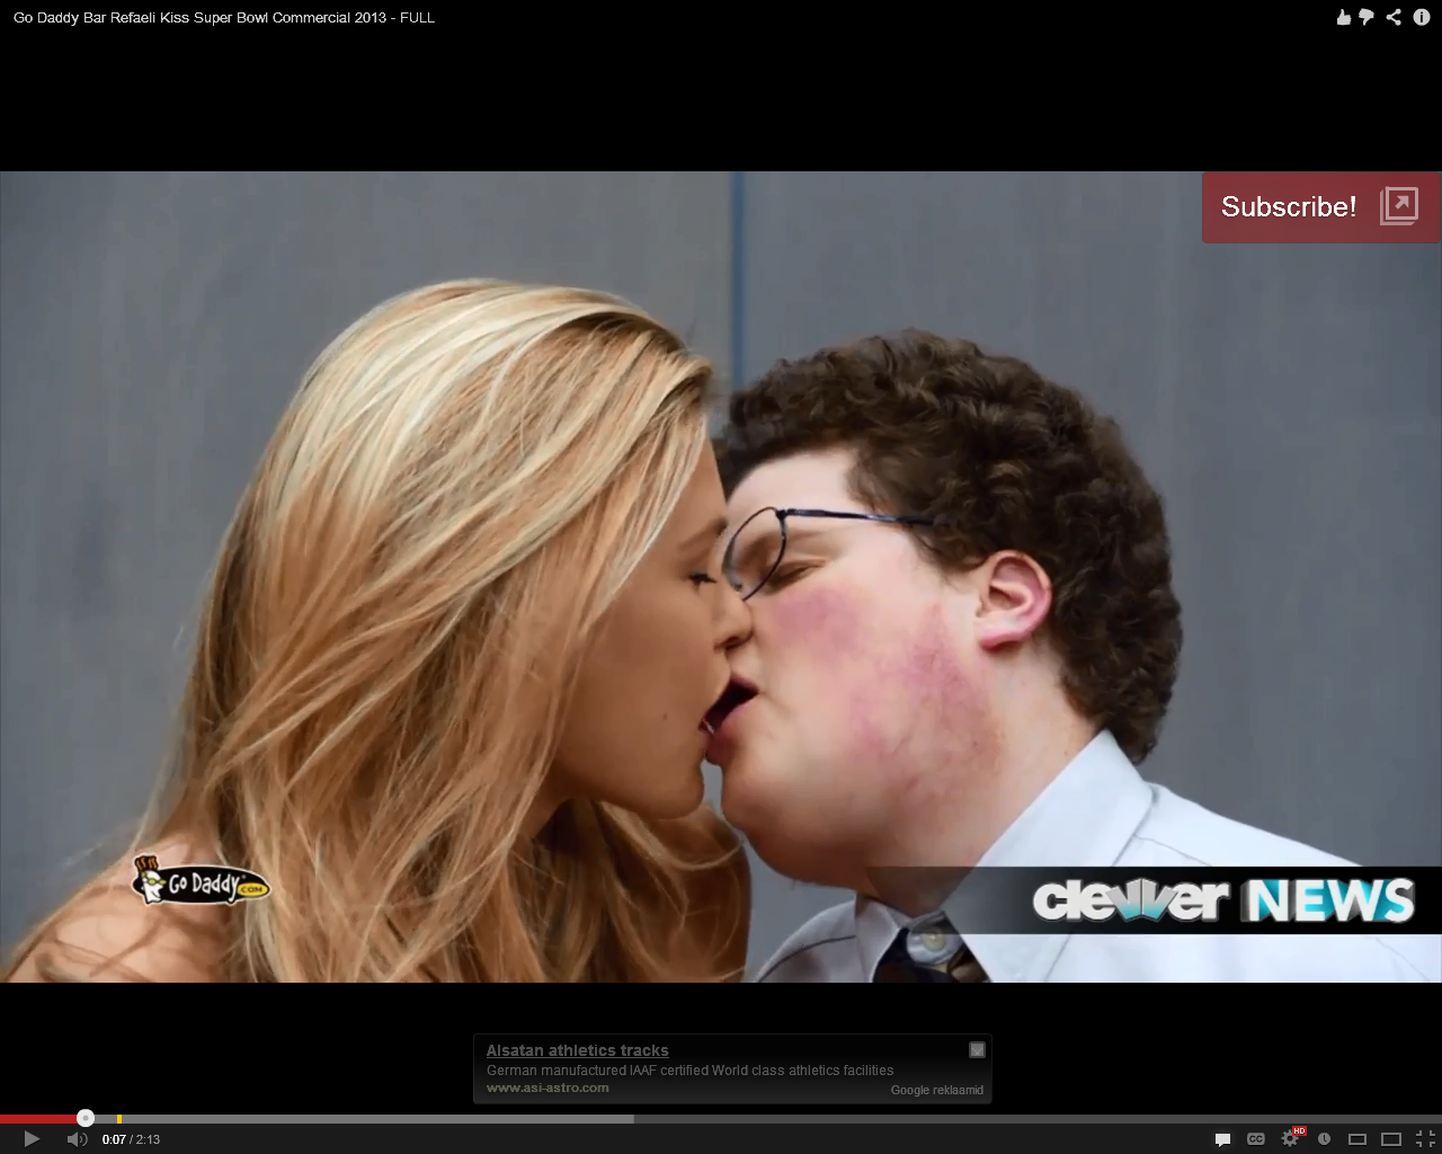 Go Daddy Bar Refaeli Kiss Super Bowl Commercial 2013